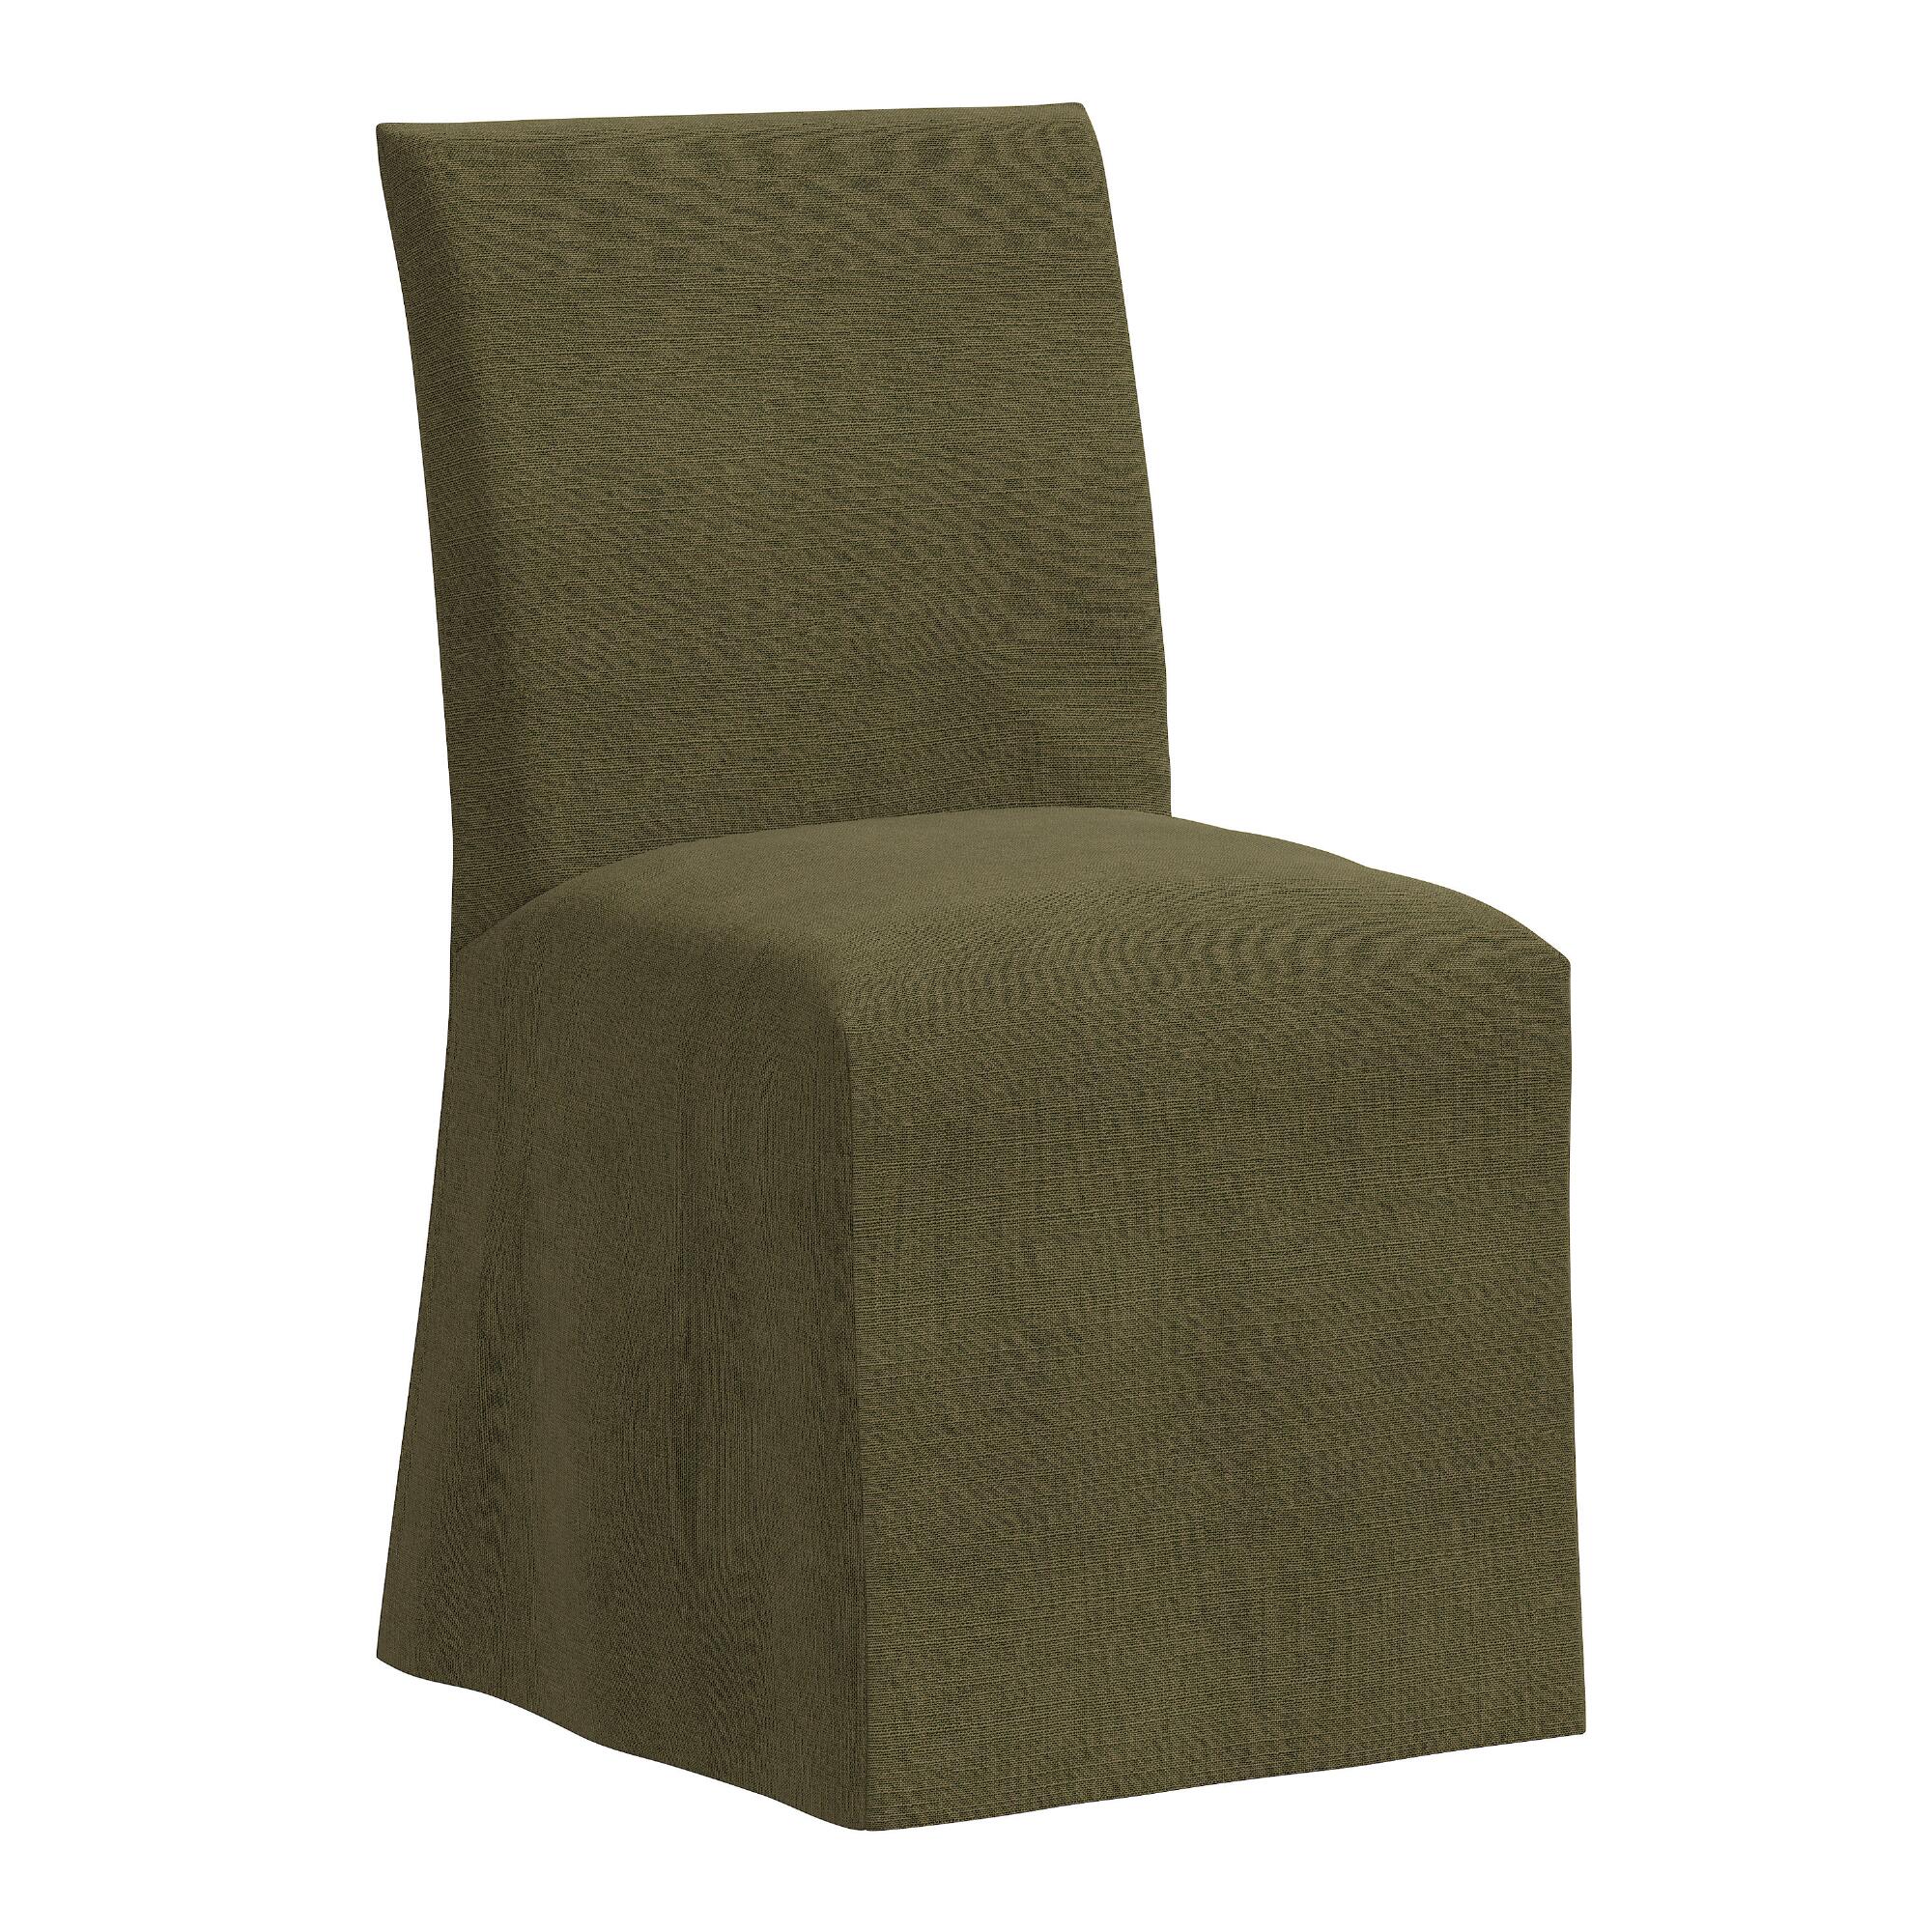 Linen Slipcover Landon Dining Chair: Orange by World Market